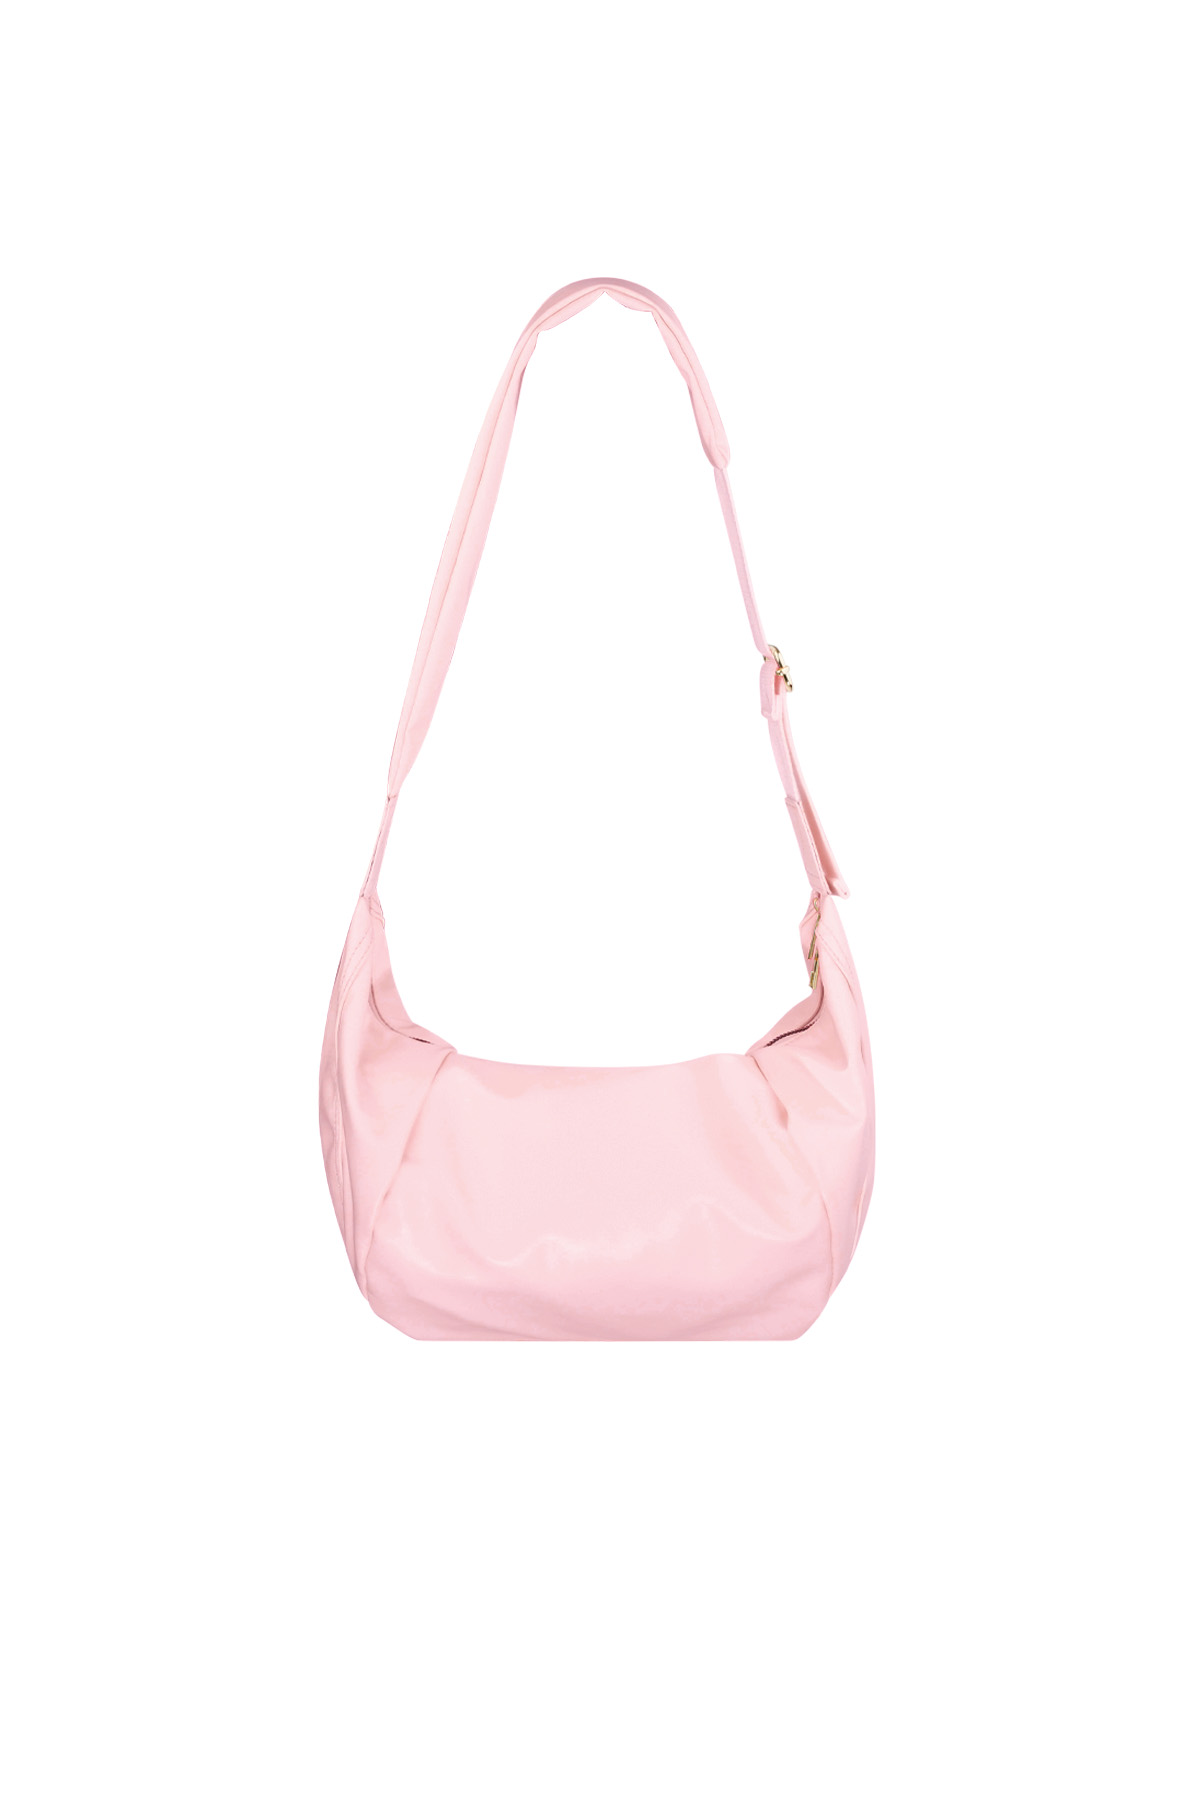 Love on top bag - pink h5 